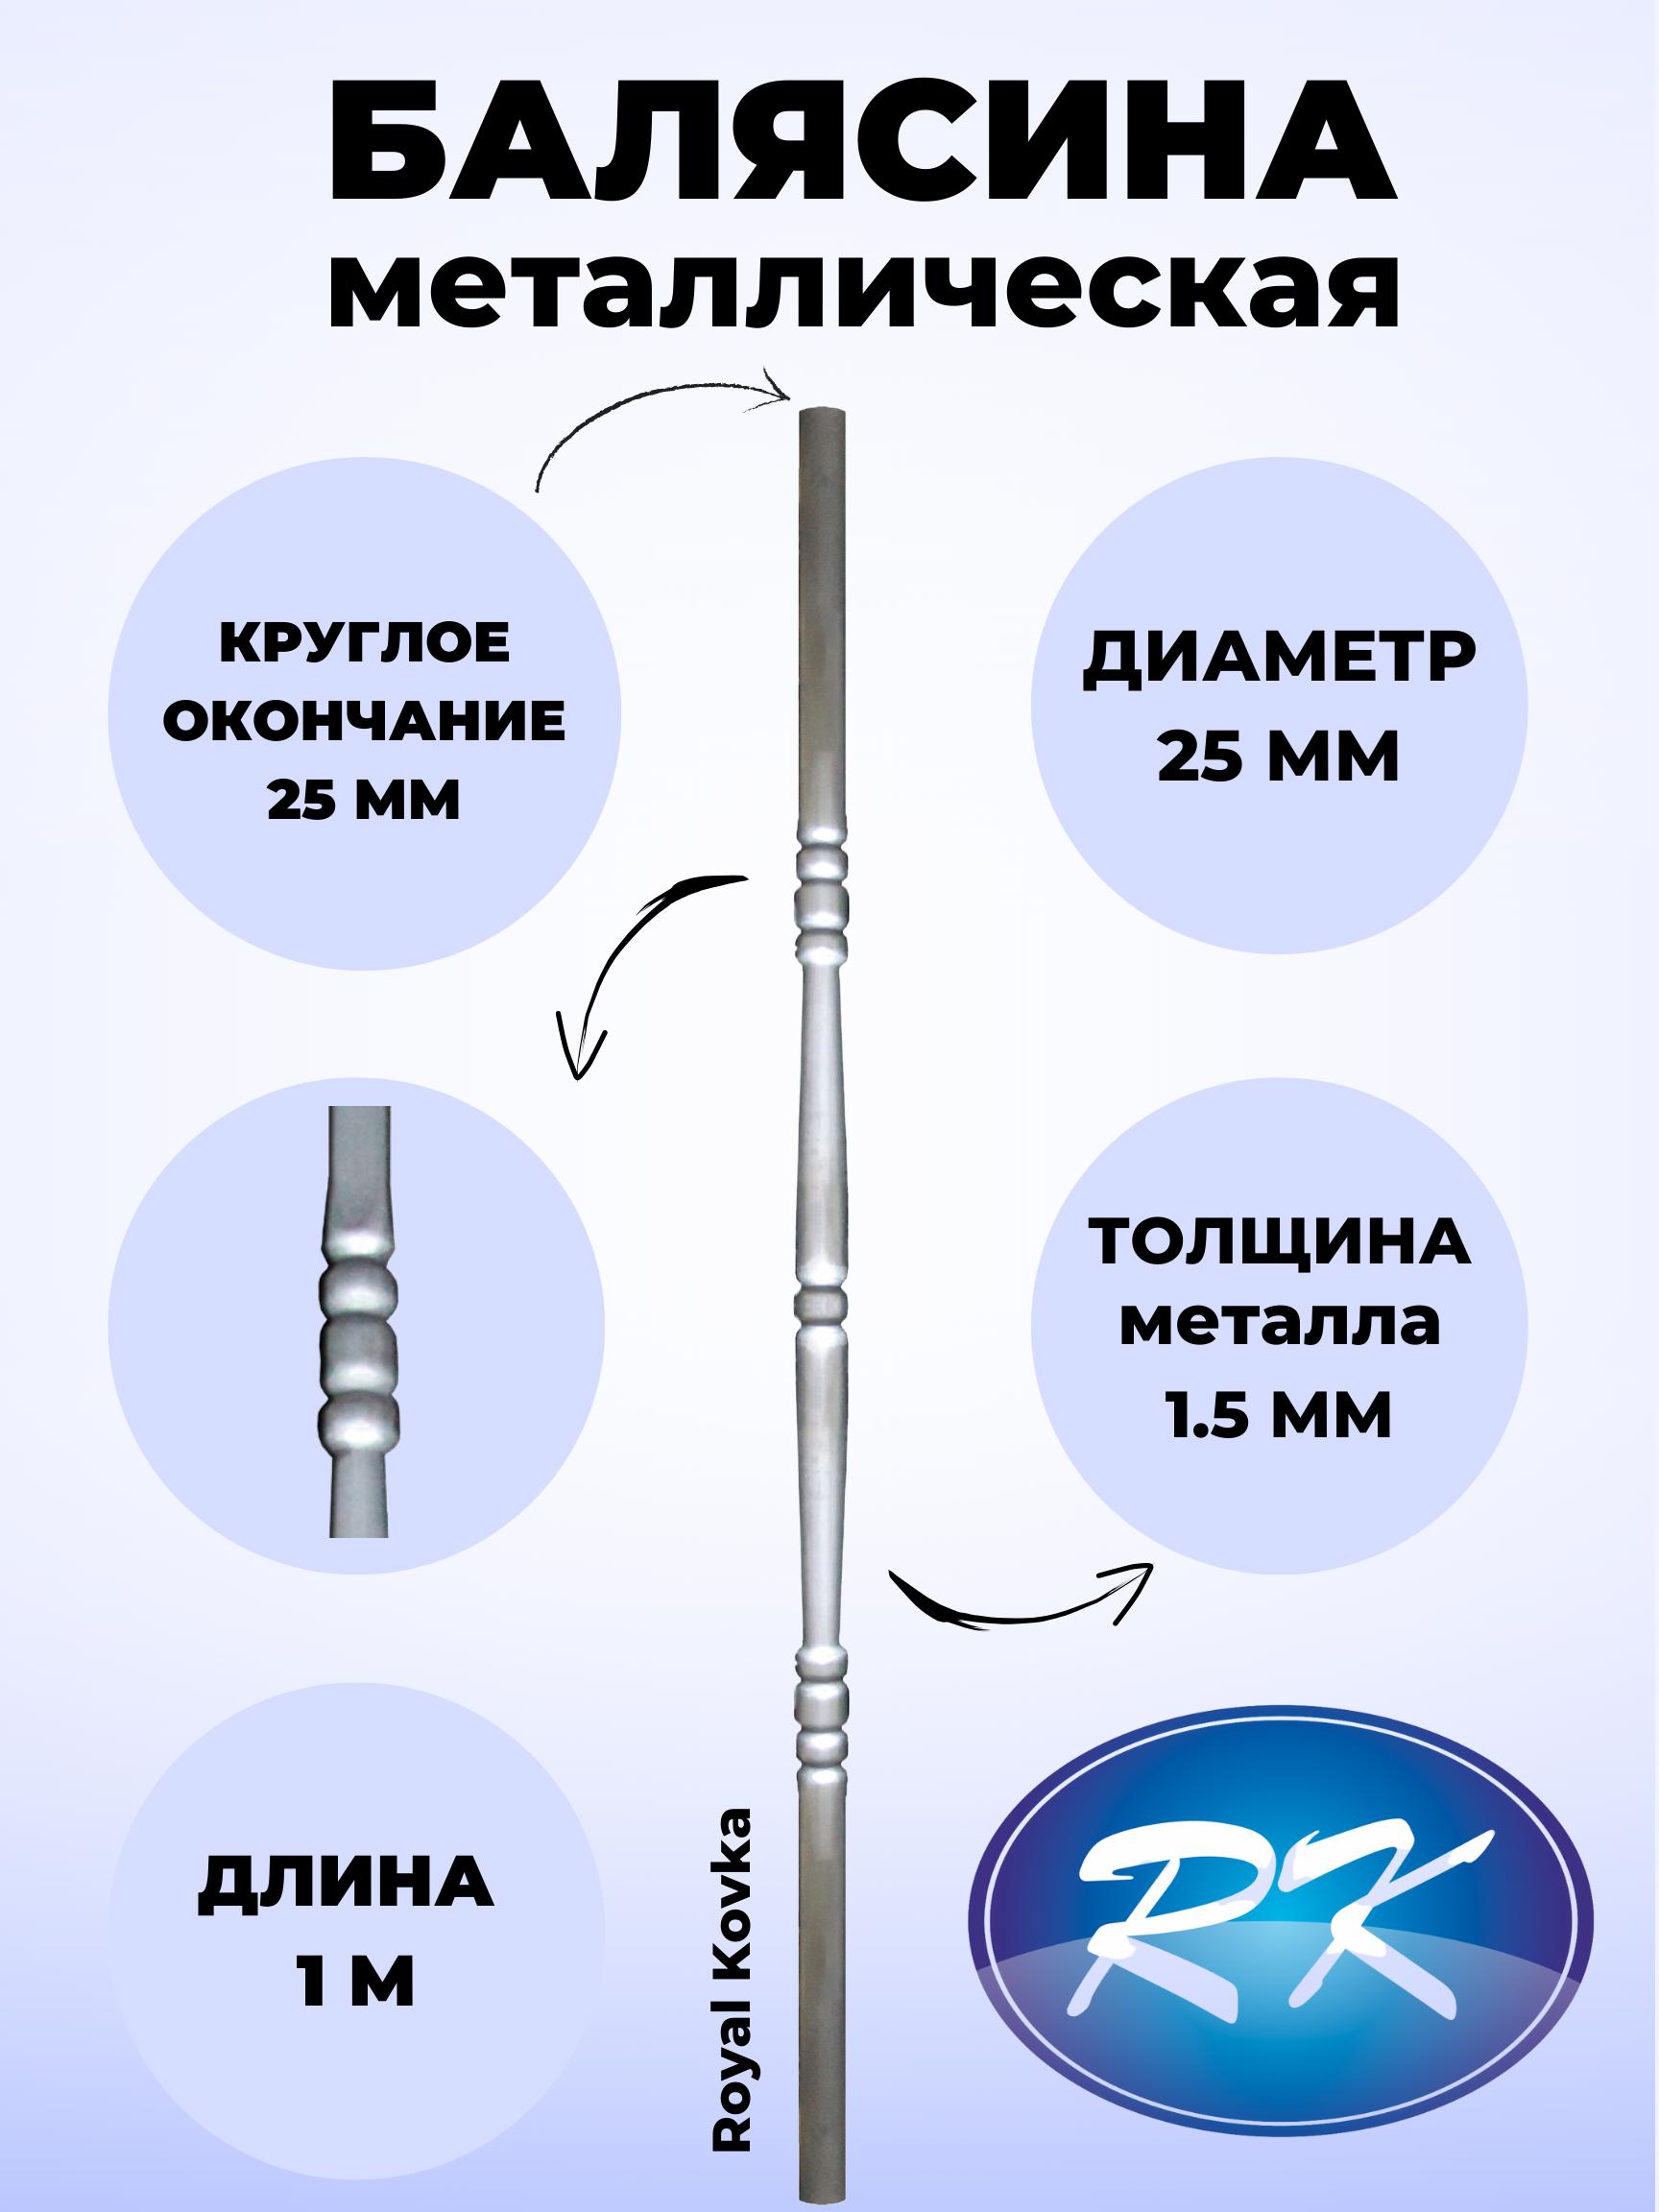 92726356 Балясина металлическая 25.1 КР диаметр 25 мм круглые окончания диаметром 25 мм STLM-0543141 ROYAL KOVKA